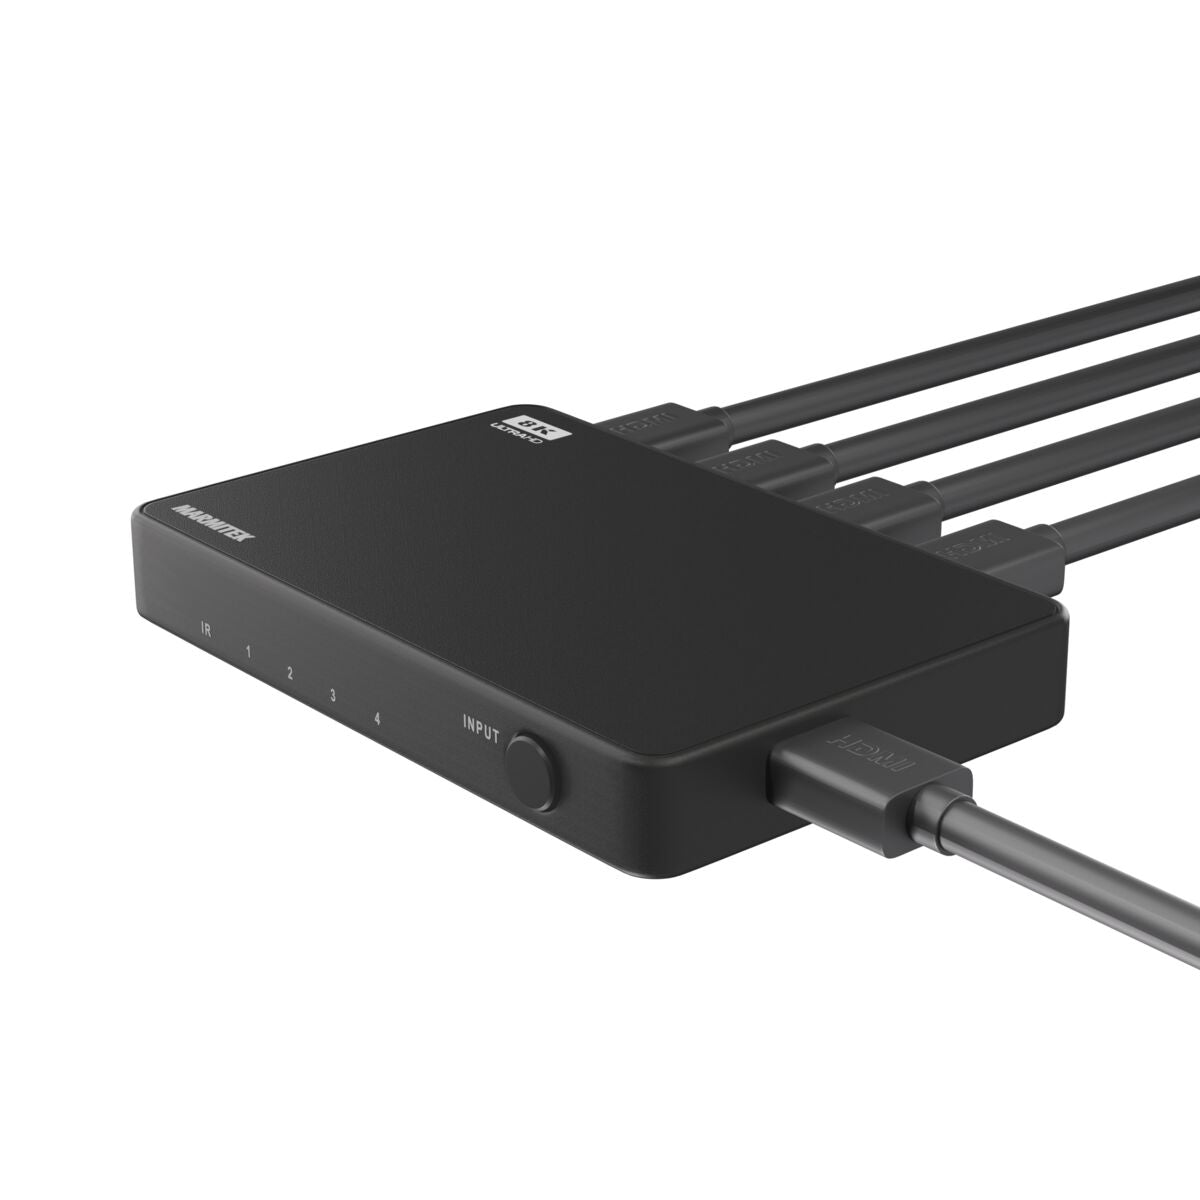 Buying a Connect 740 HDMI switch 4K120/8K60? – Marmitek